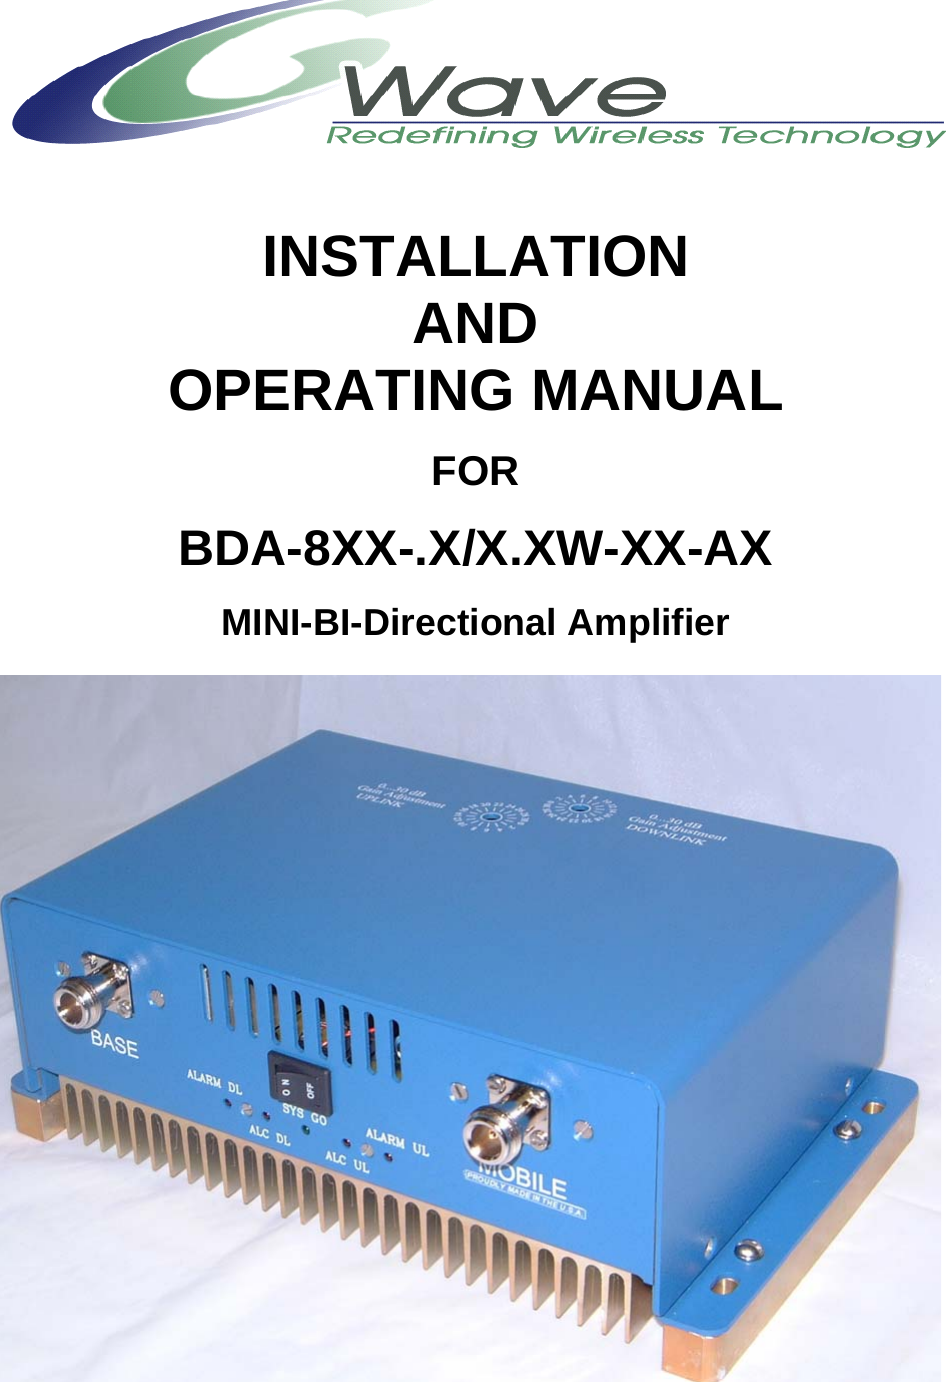   INSTALLATION AND OPERATING MANUAL  FOR  BDA-8XX-.X/X.XW-XX-AX  MINI-BI-Directional Amplifier    